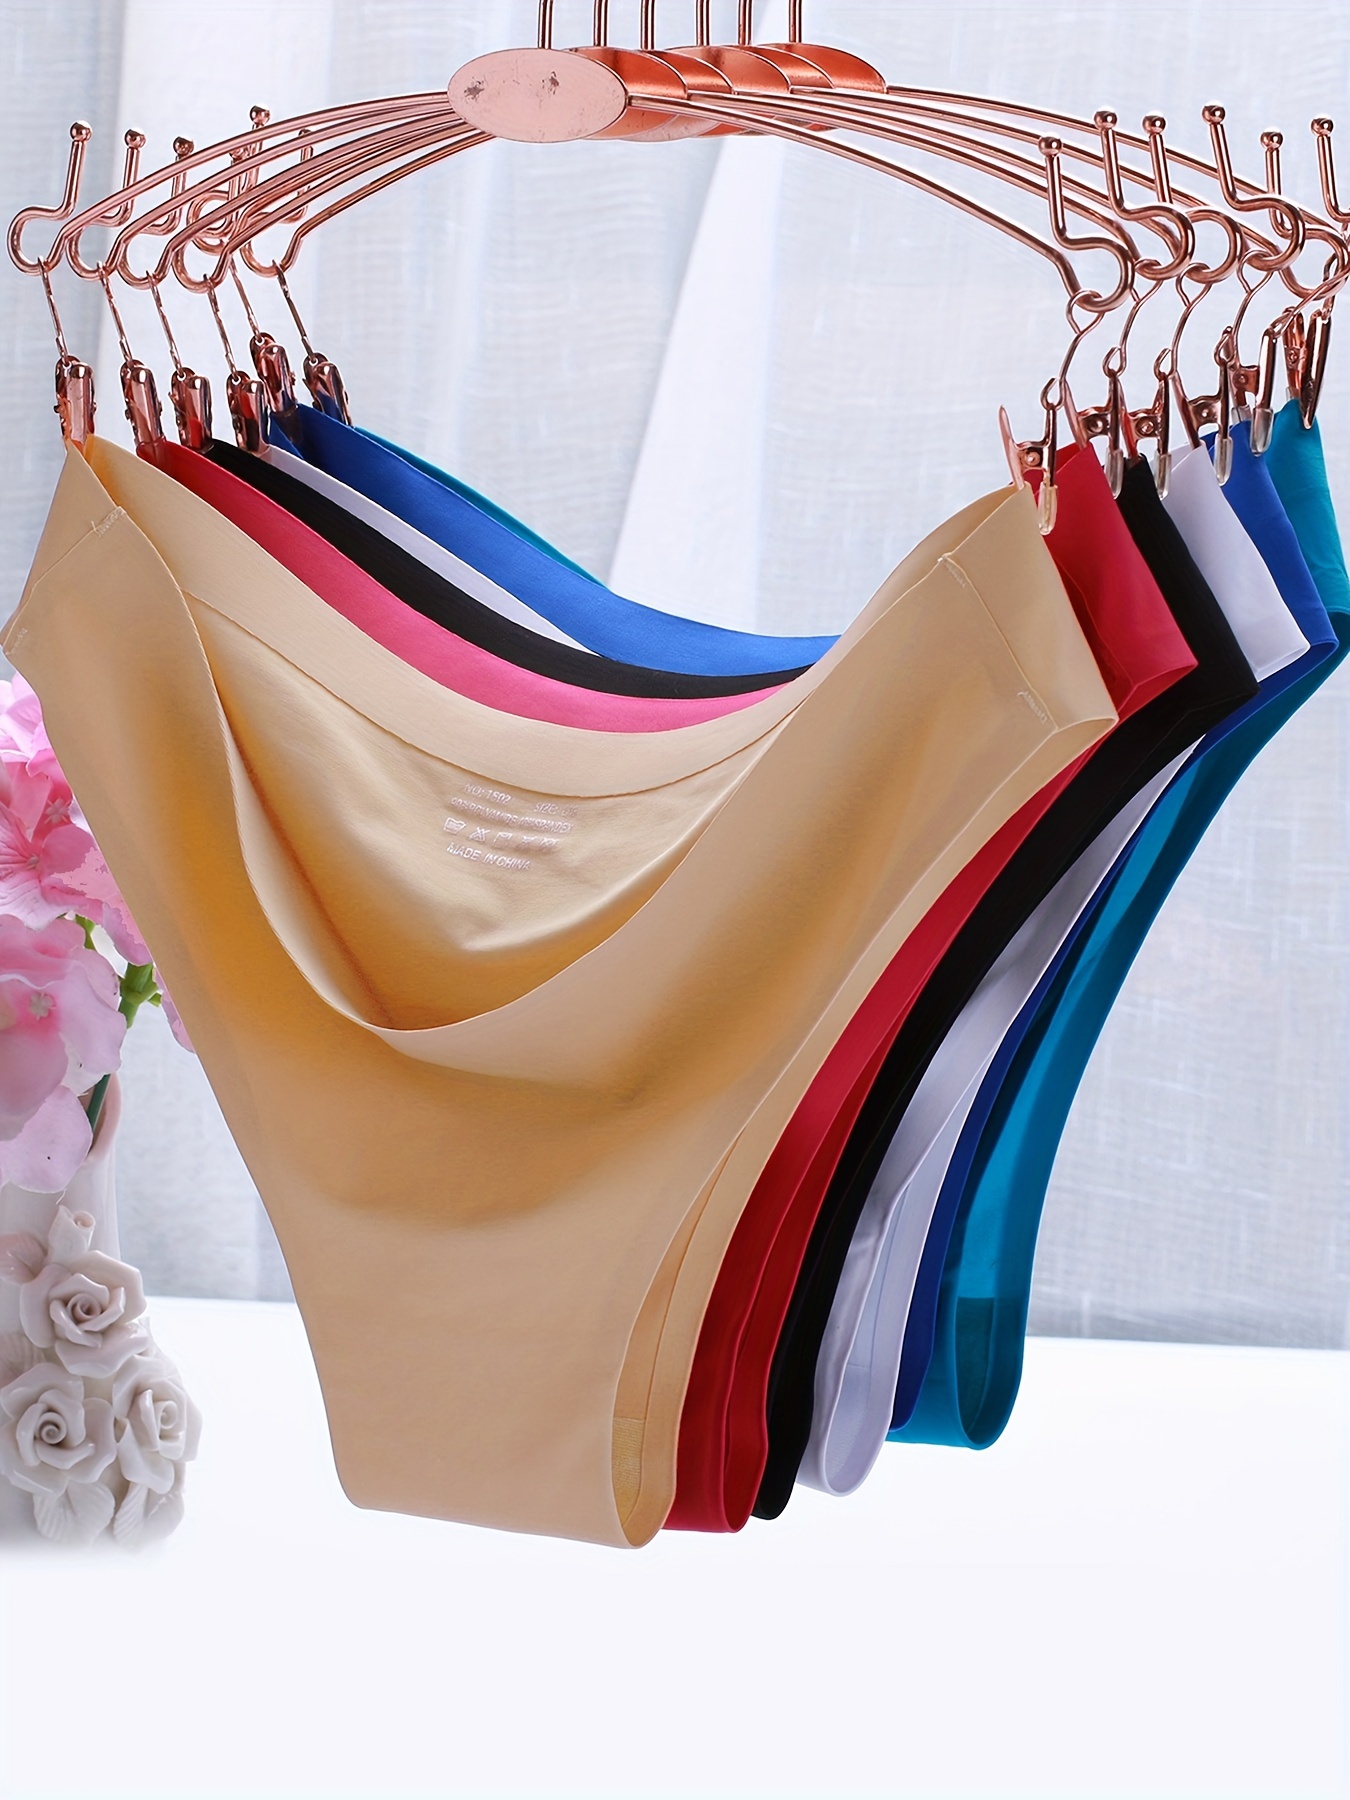 Women's Seamless Underwear Breathable Stretch Bikini Panties